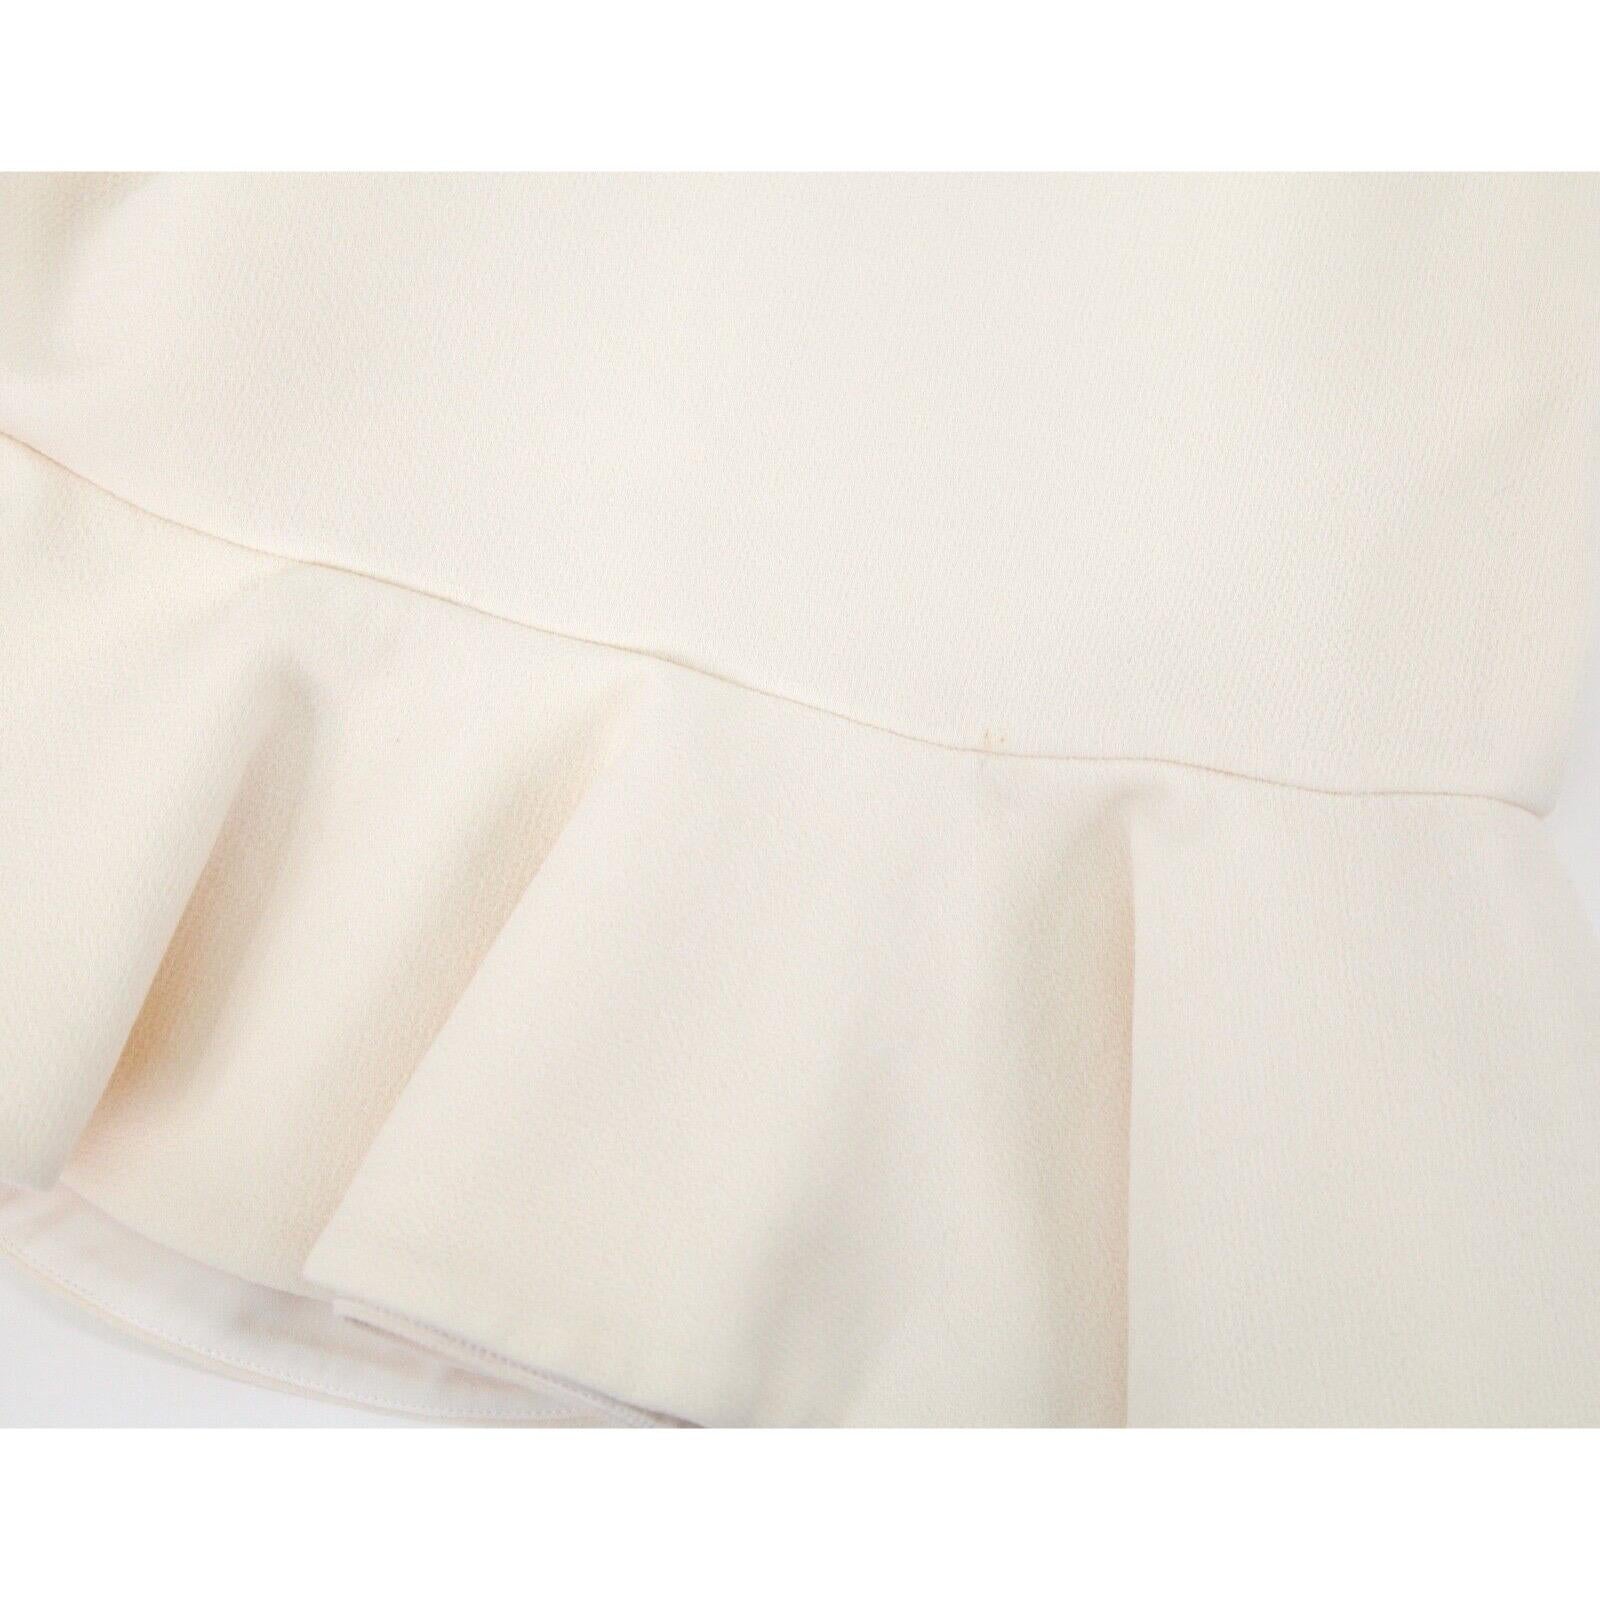 VICTORIA VICTORIA BECKHAM Ivory Dress Sleeveless Wool Crepe Flared Sz M For Sale 4